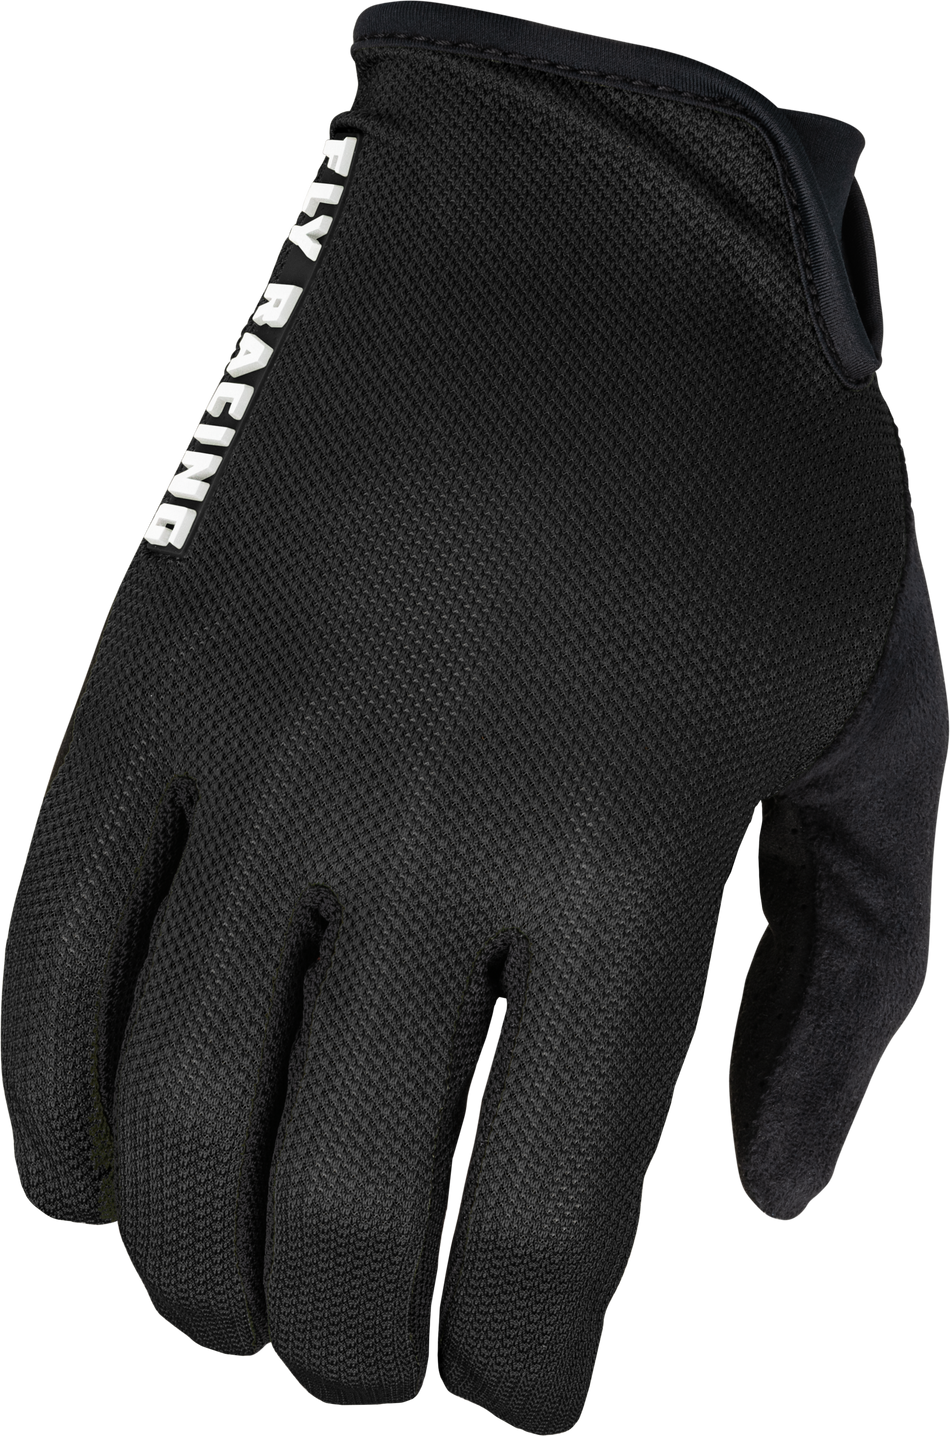 FLY RACING Mesh Gloves Black Lg 375-300L